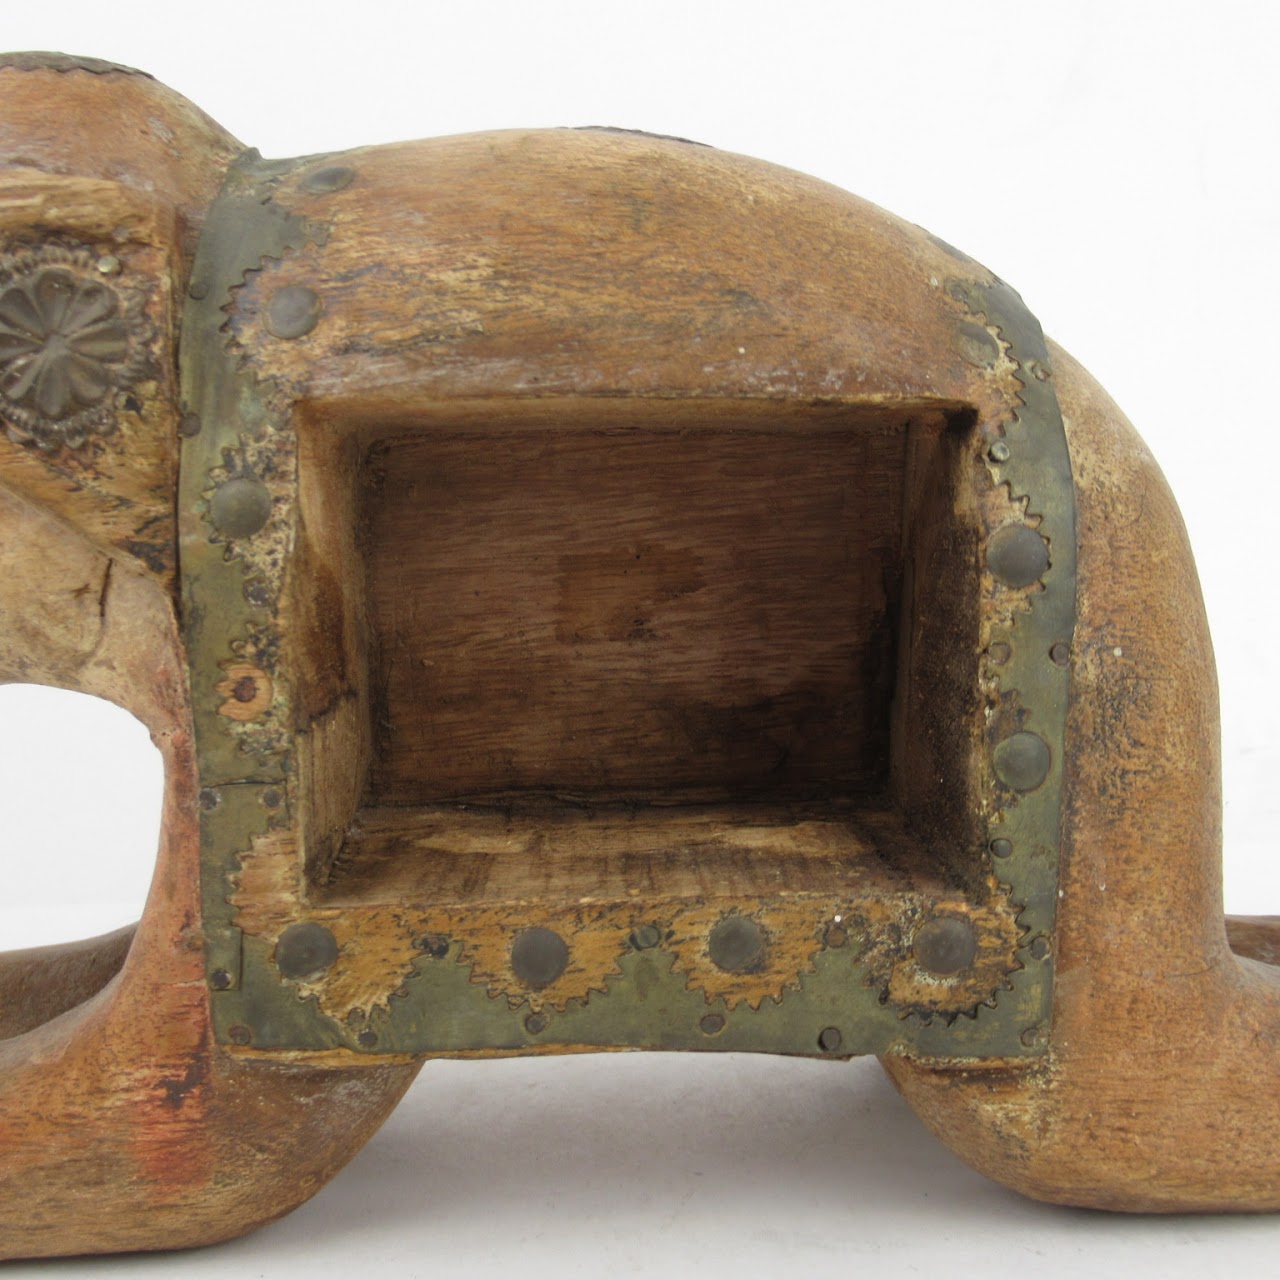 Carved Wood Elephant Box